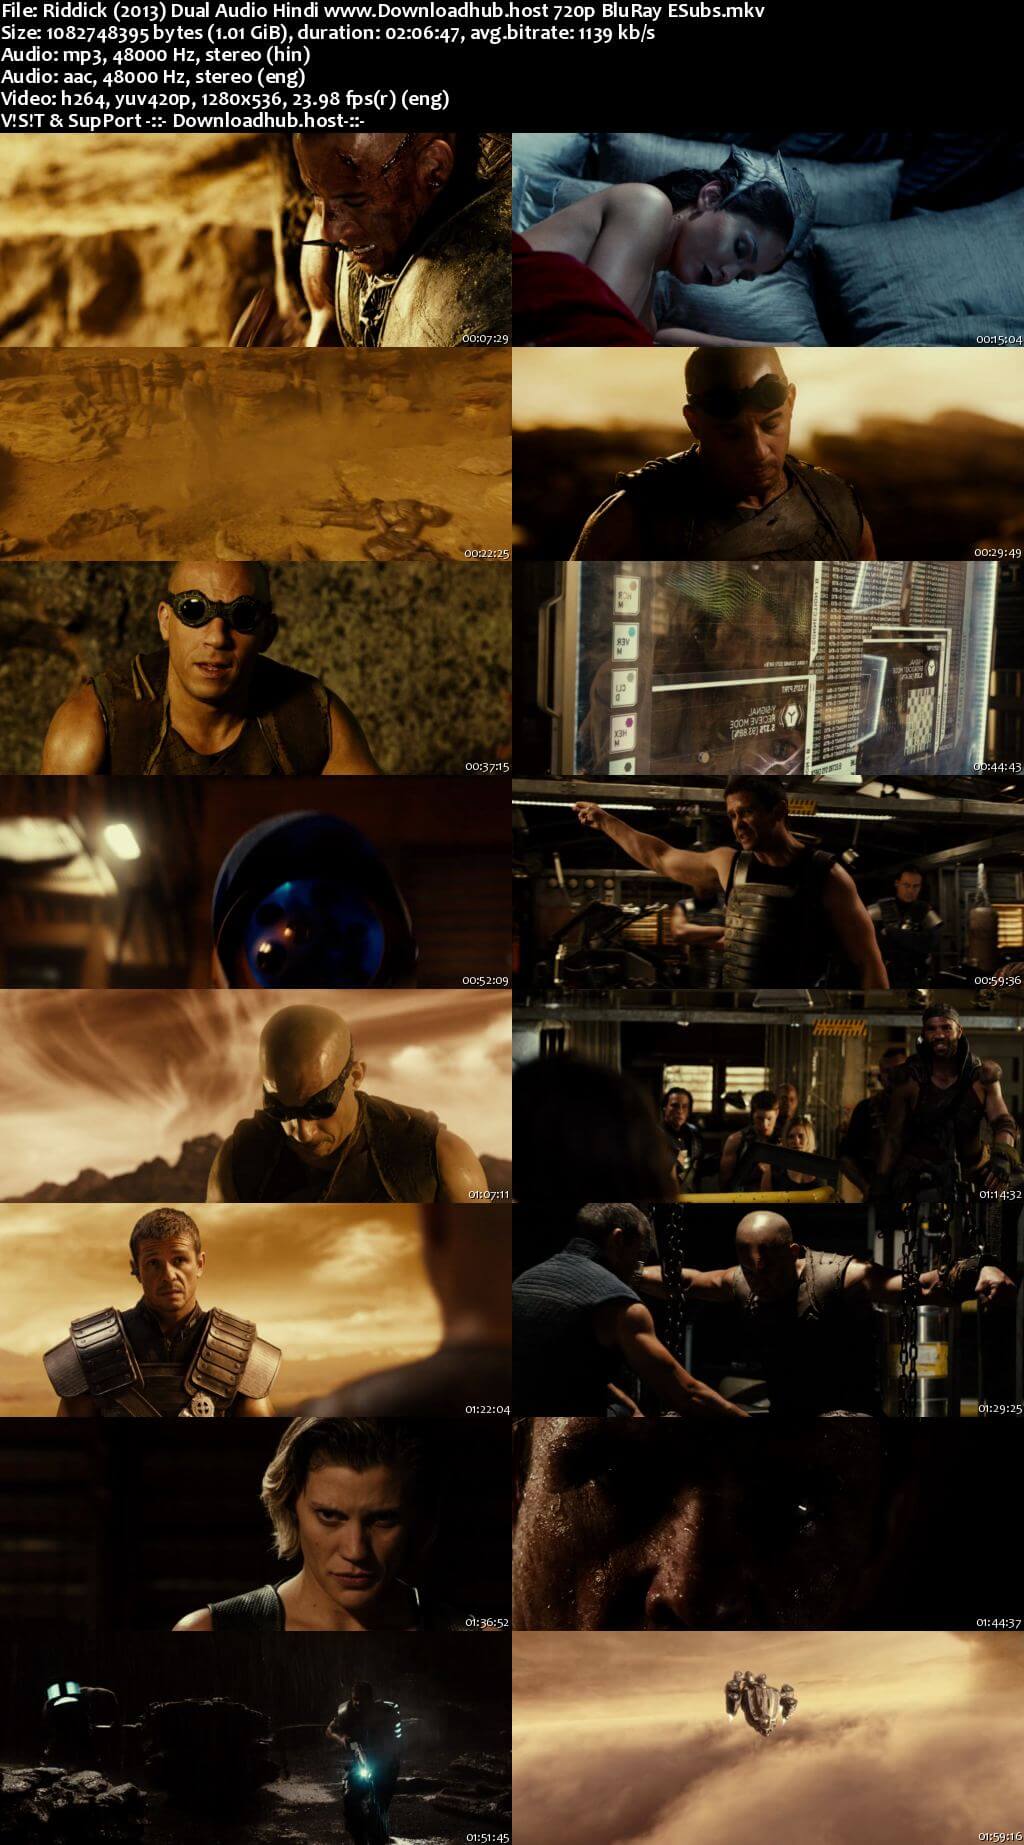 Riddick 2013 Hindi Dual Audio 720p BluRay ESubs